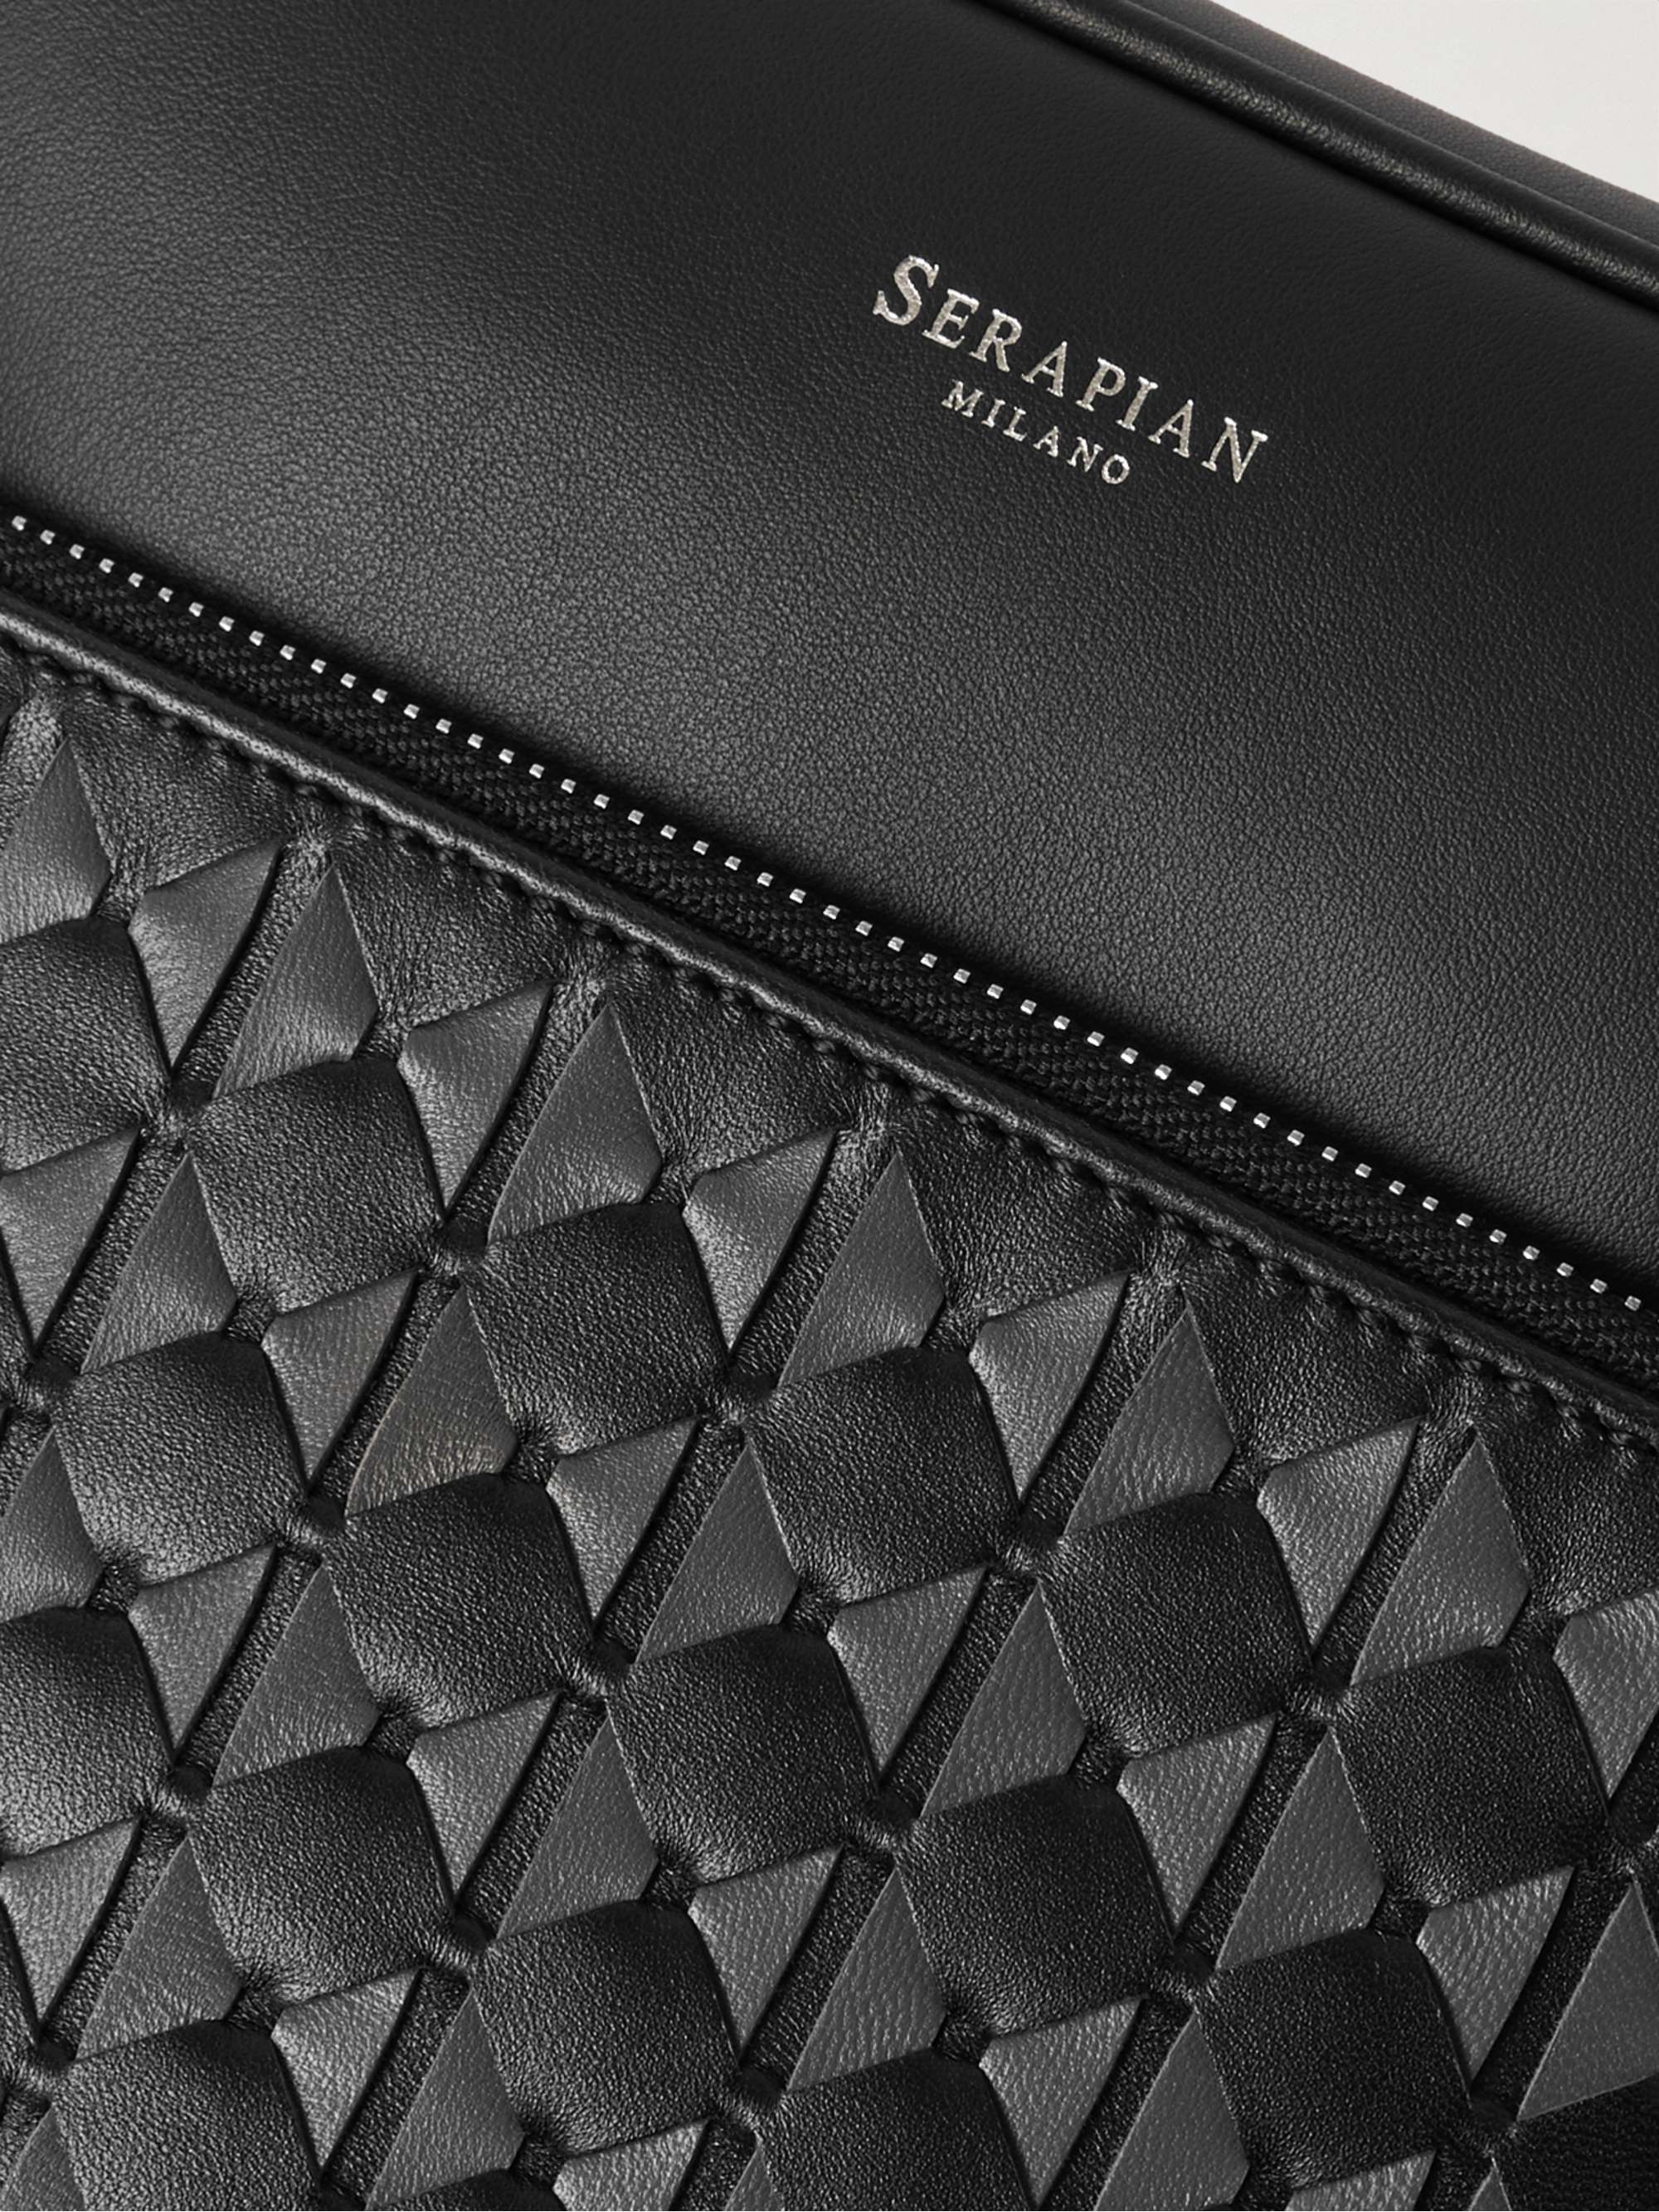 SERAPIAN Mosaico Leather Messenger Bag